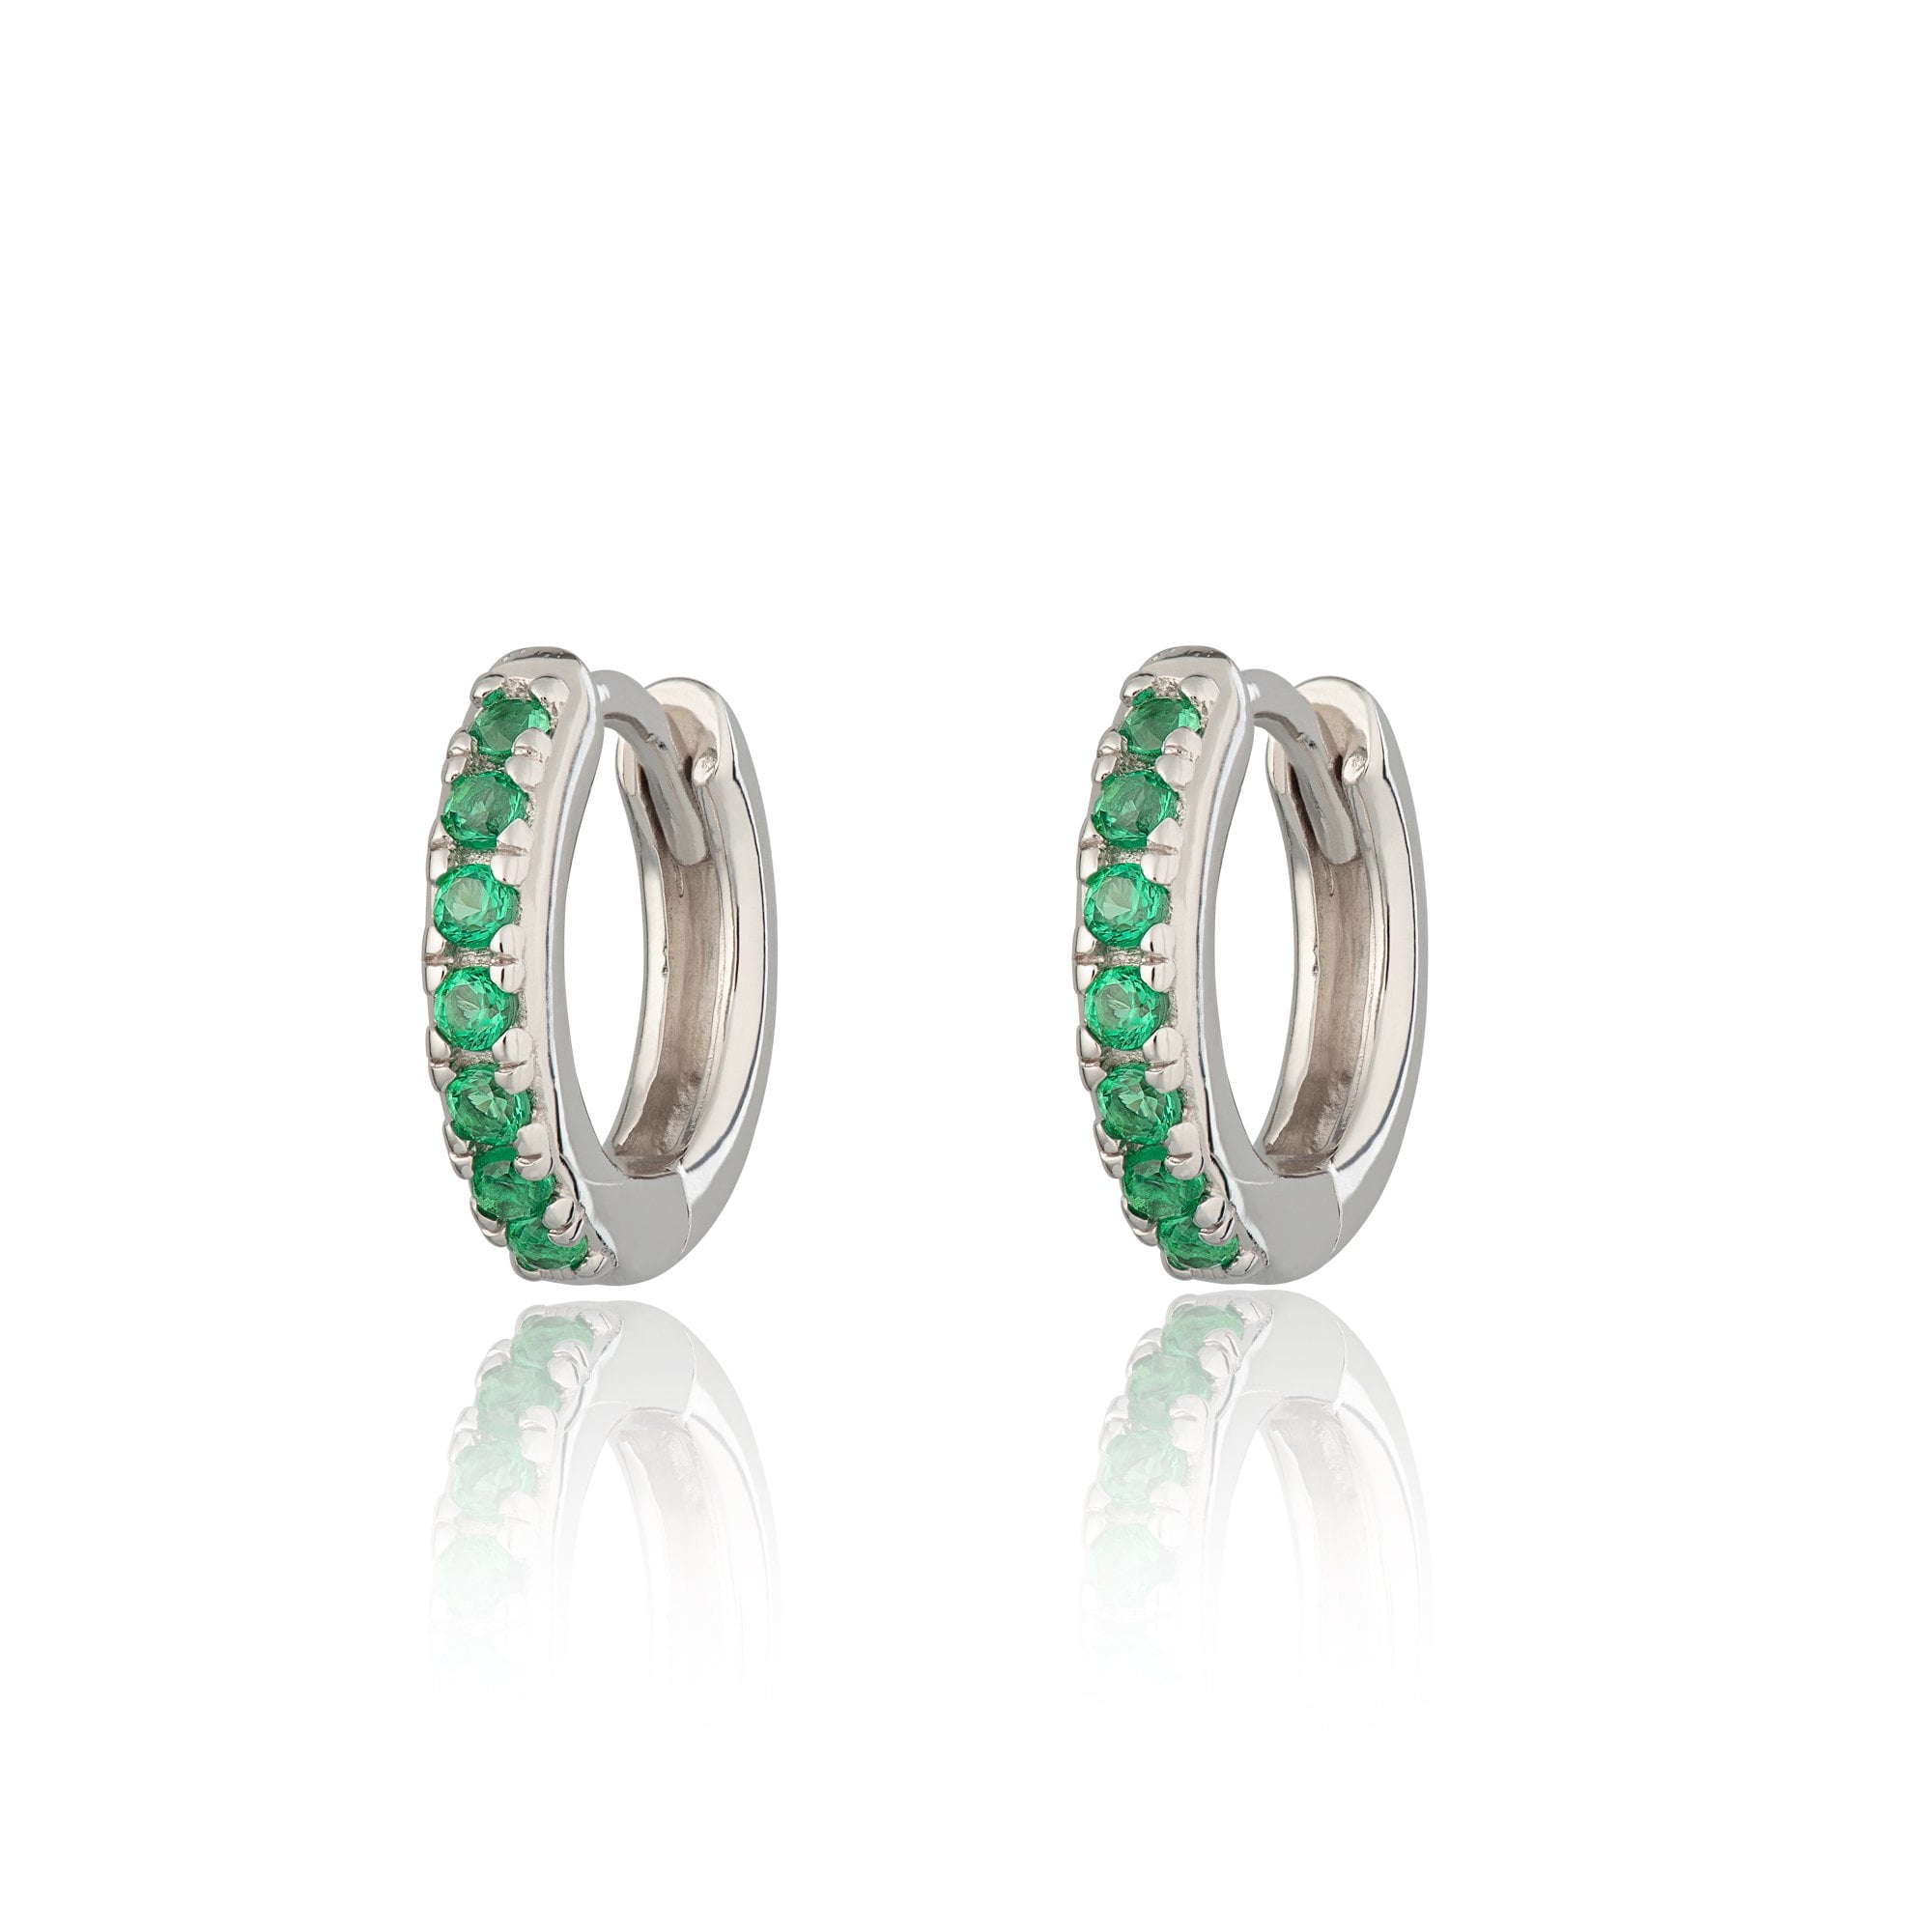 Huggie Earrings with Green Stones